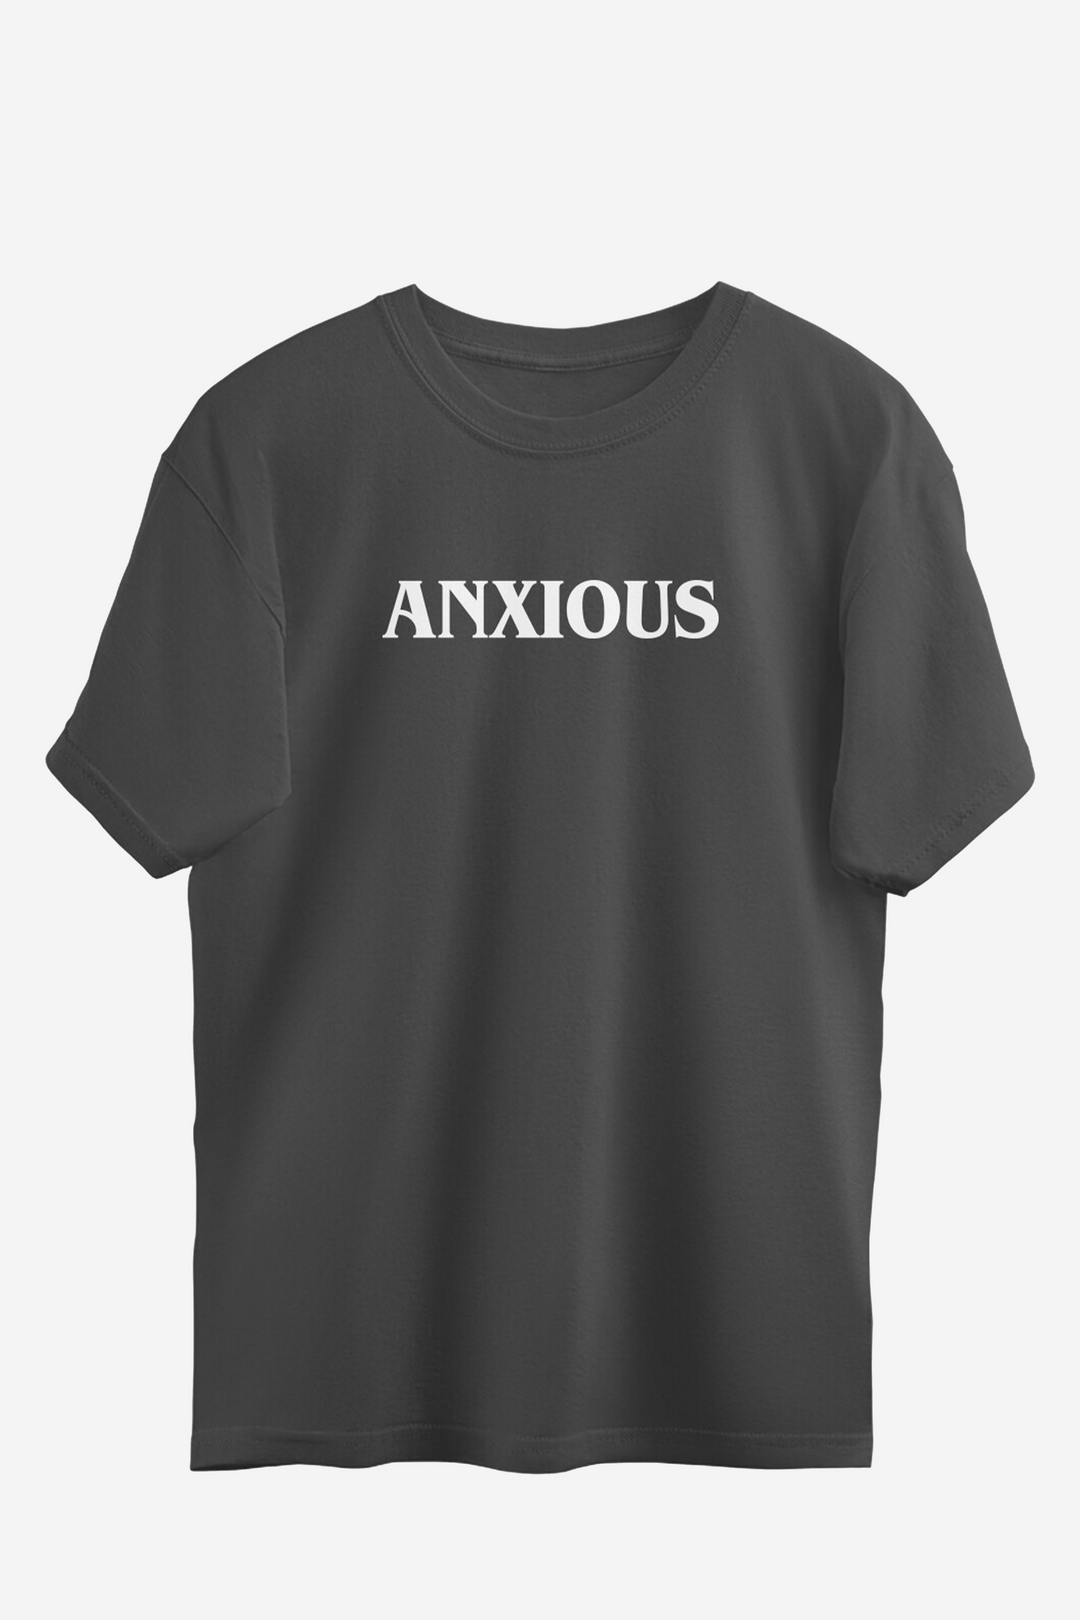 Anxious Oversized T-shirt